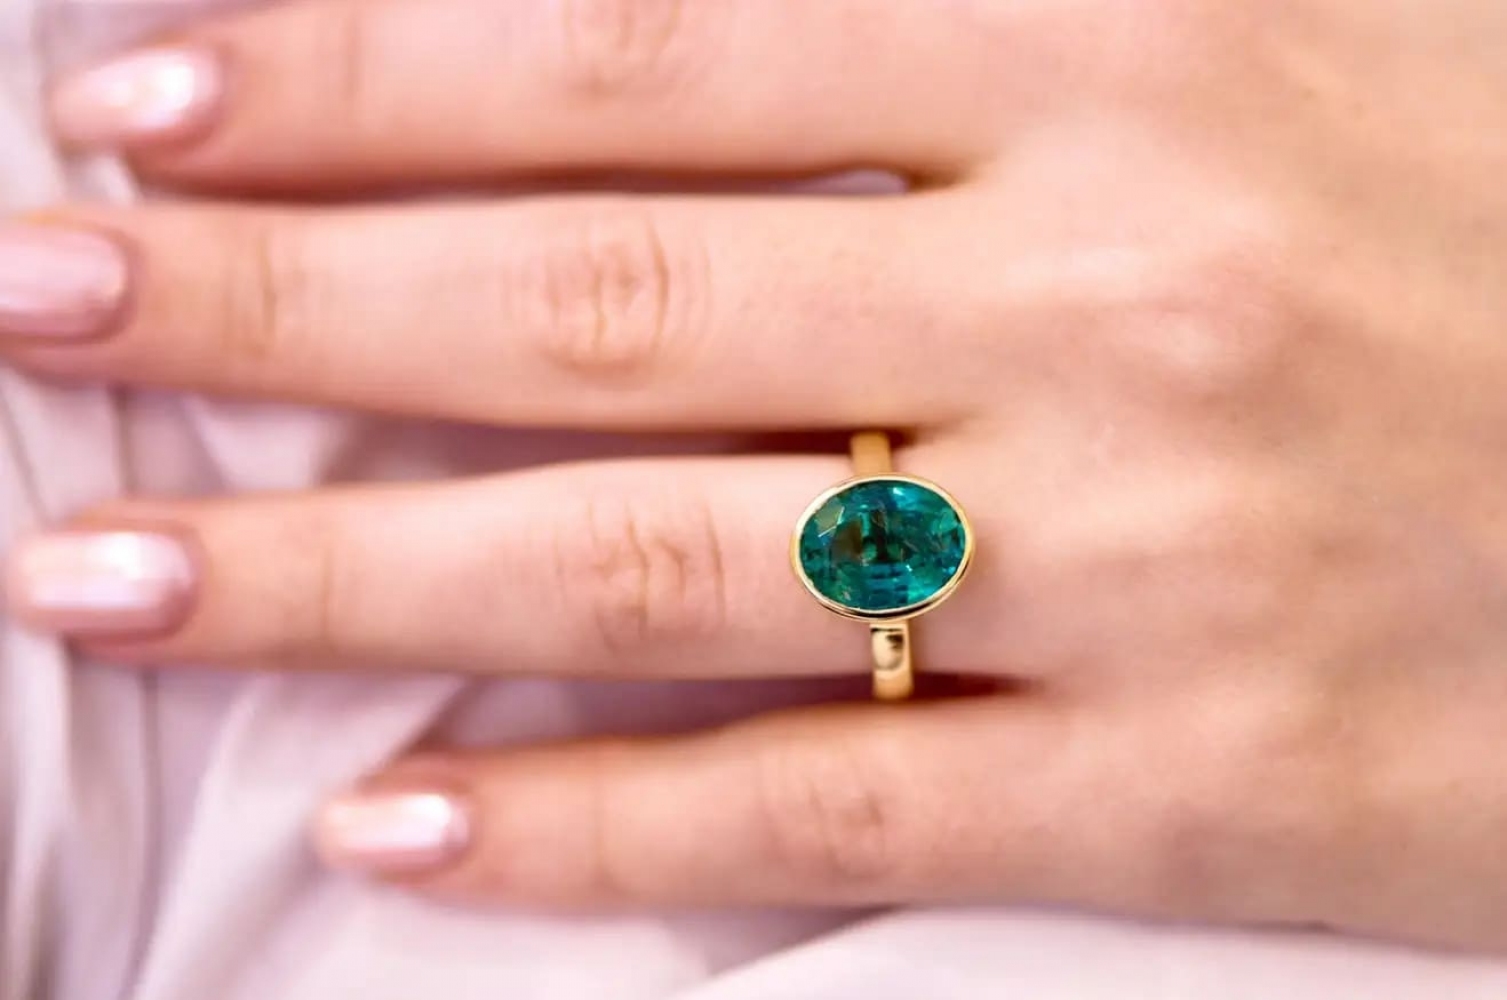 3.94 Carat Intense Green Zambian Emerald 18 Karat Yellow Gold Ring